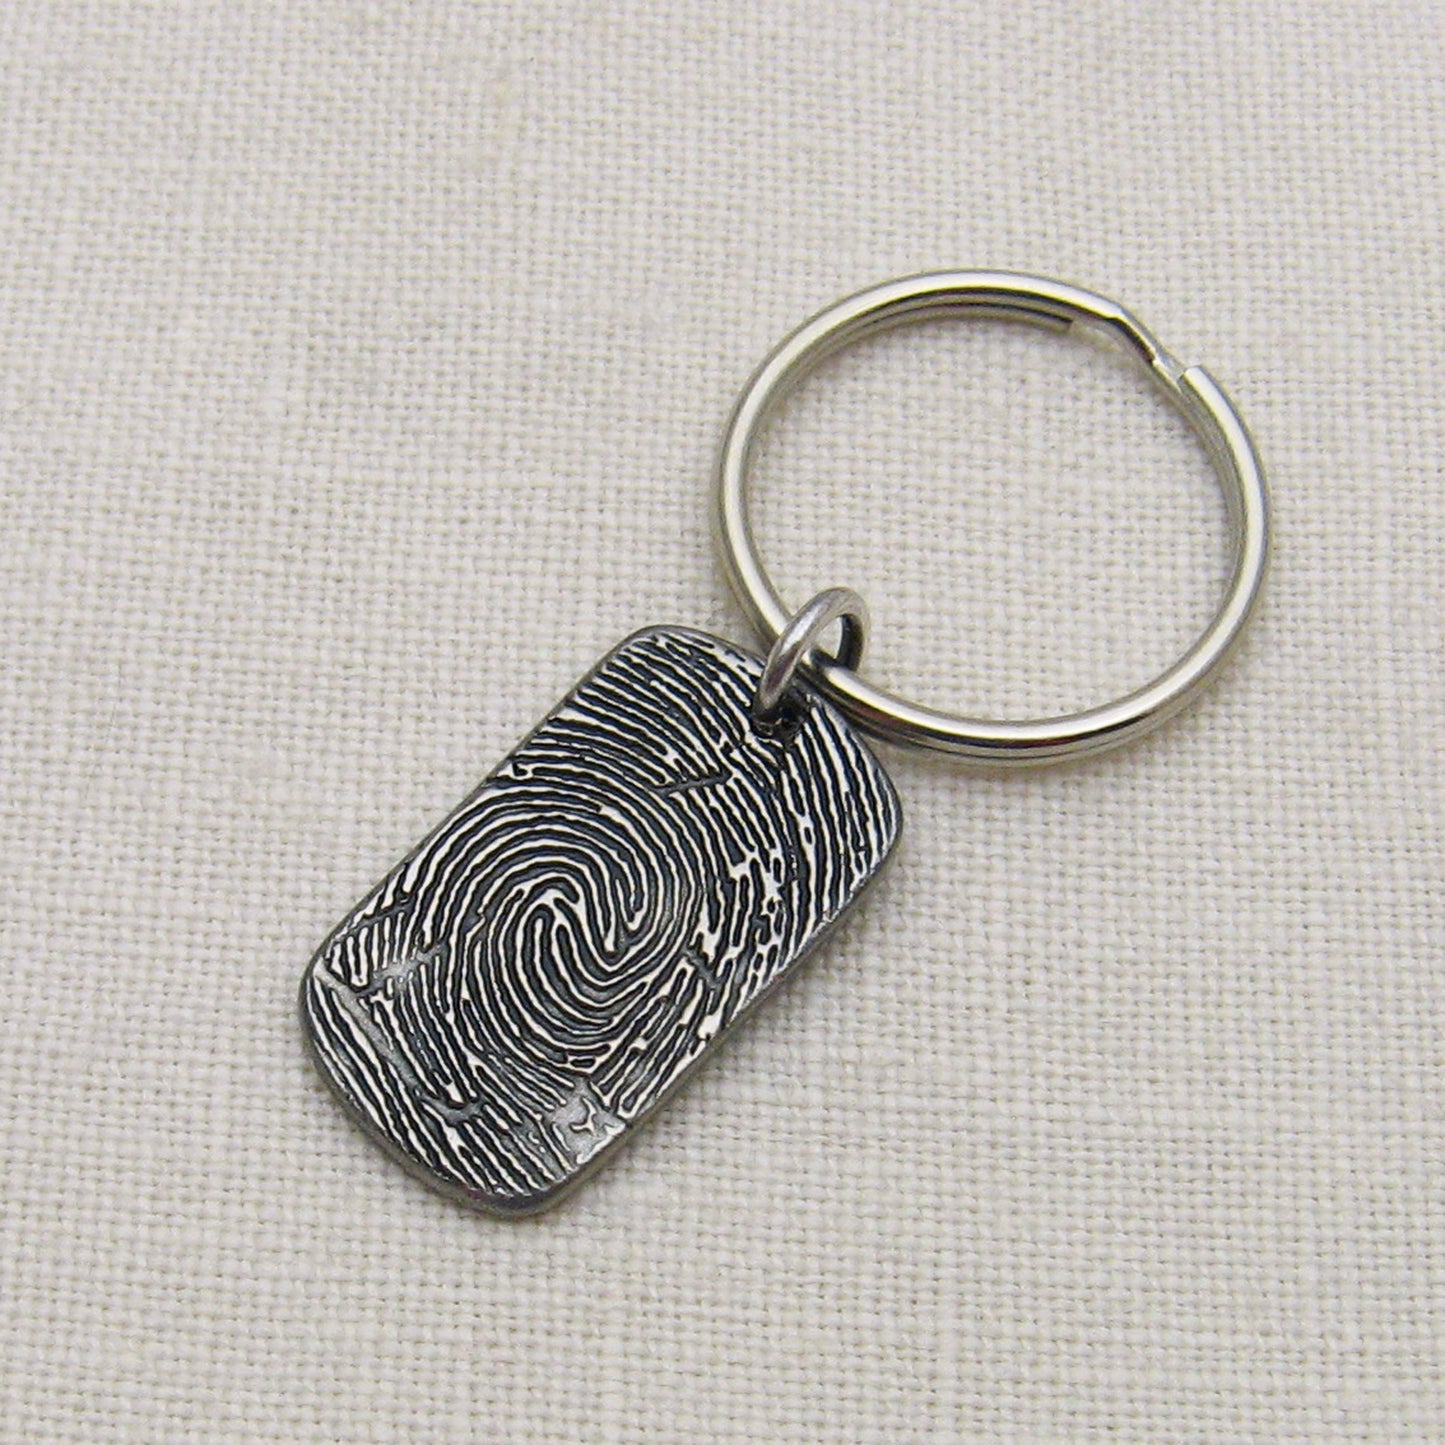 Rustic Metal Dog Tag Fingerprint Keychain